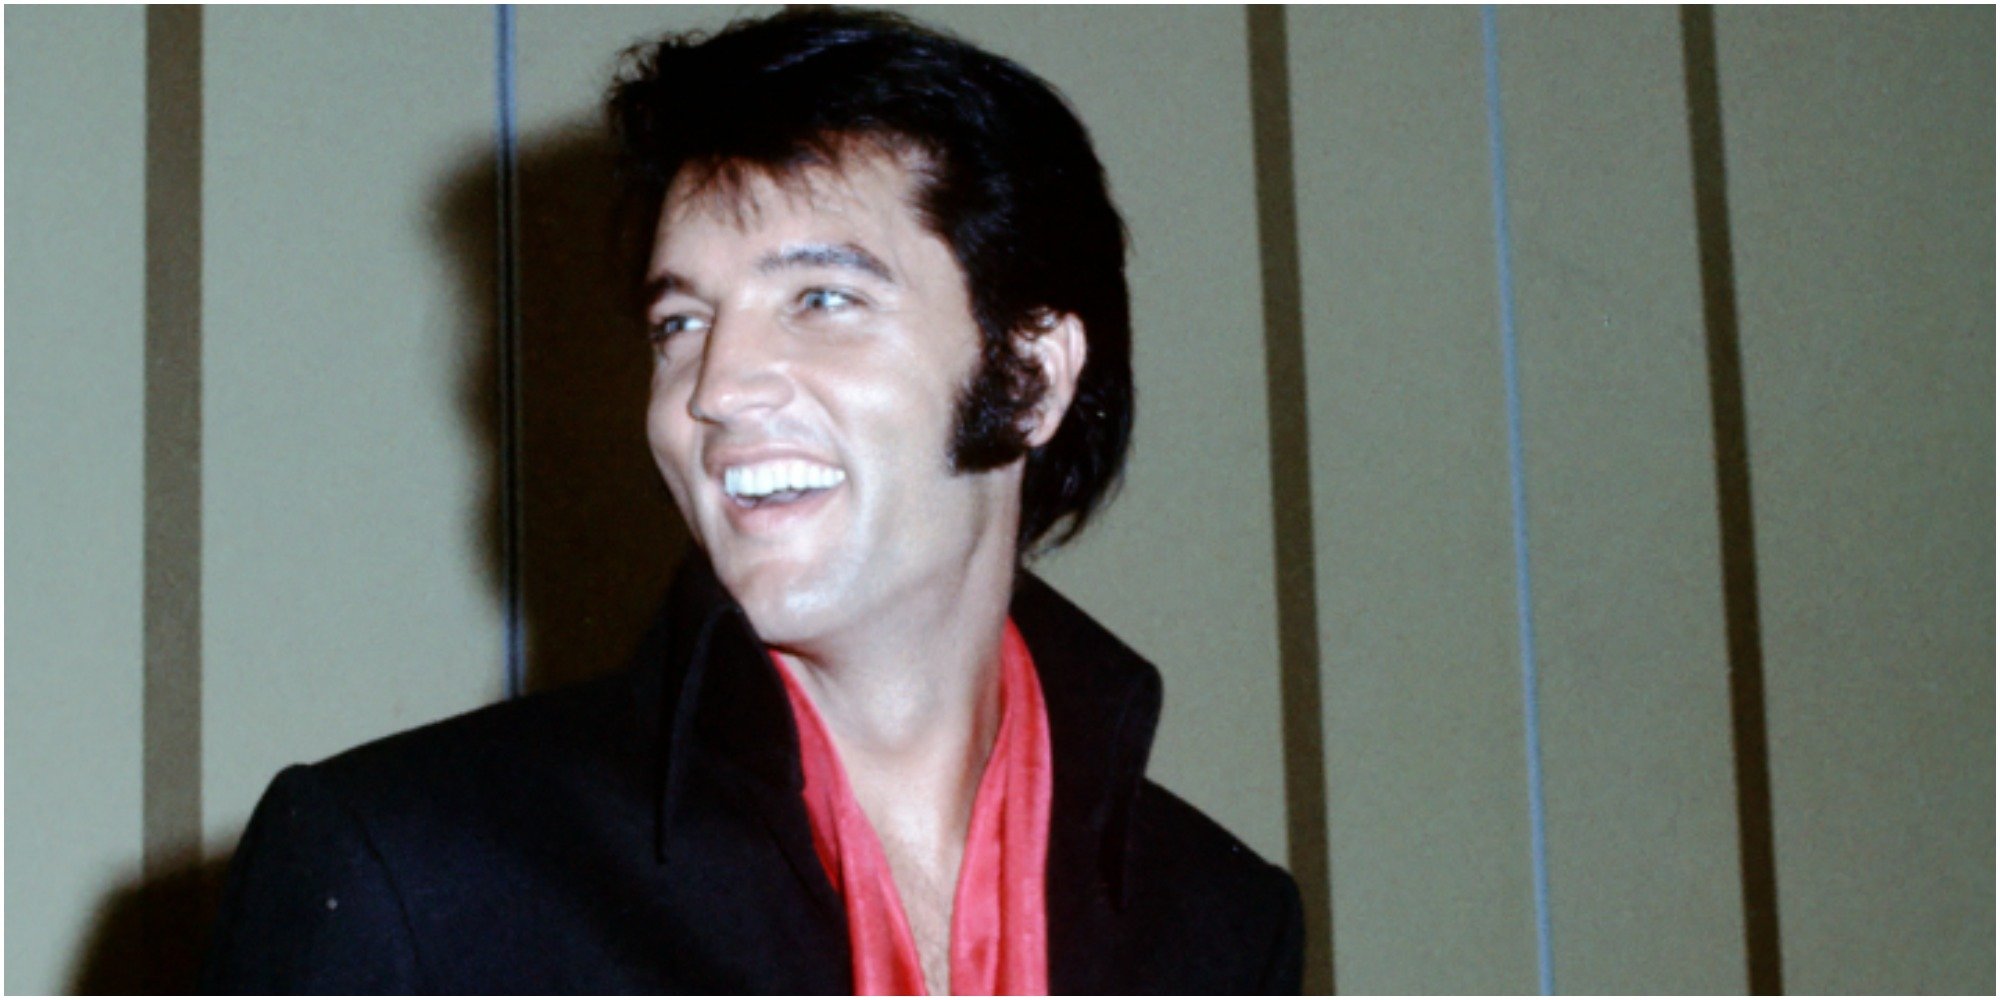 Elvis Presley photographed in 1969.